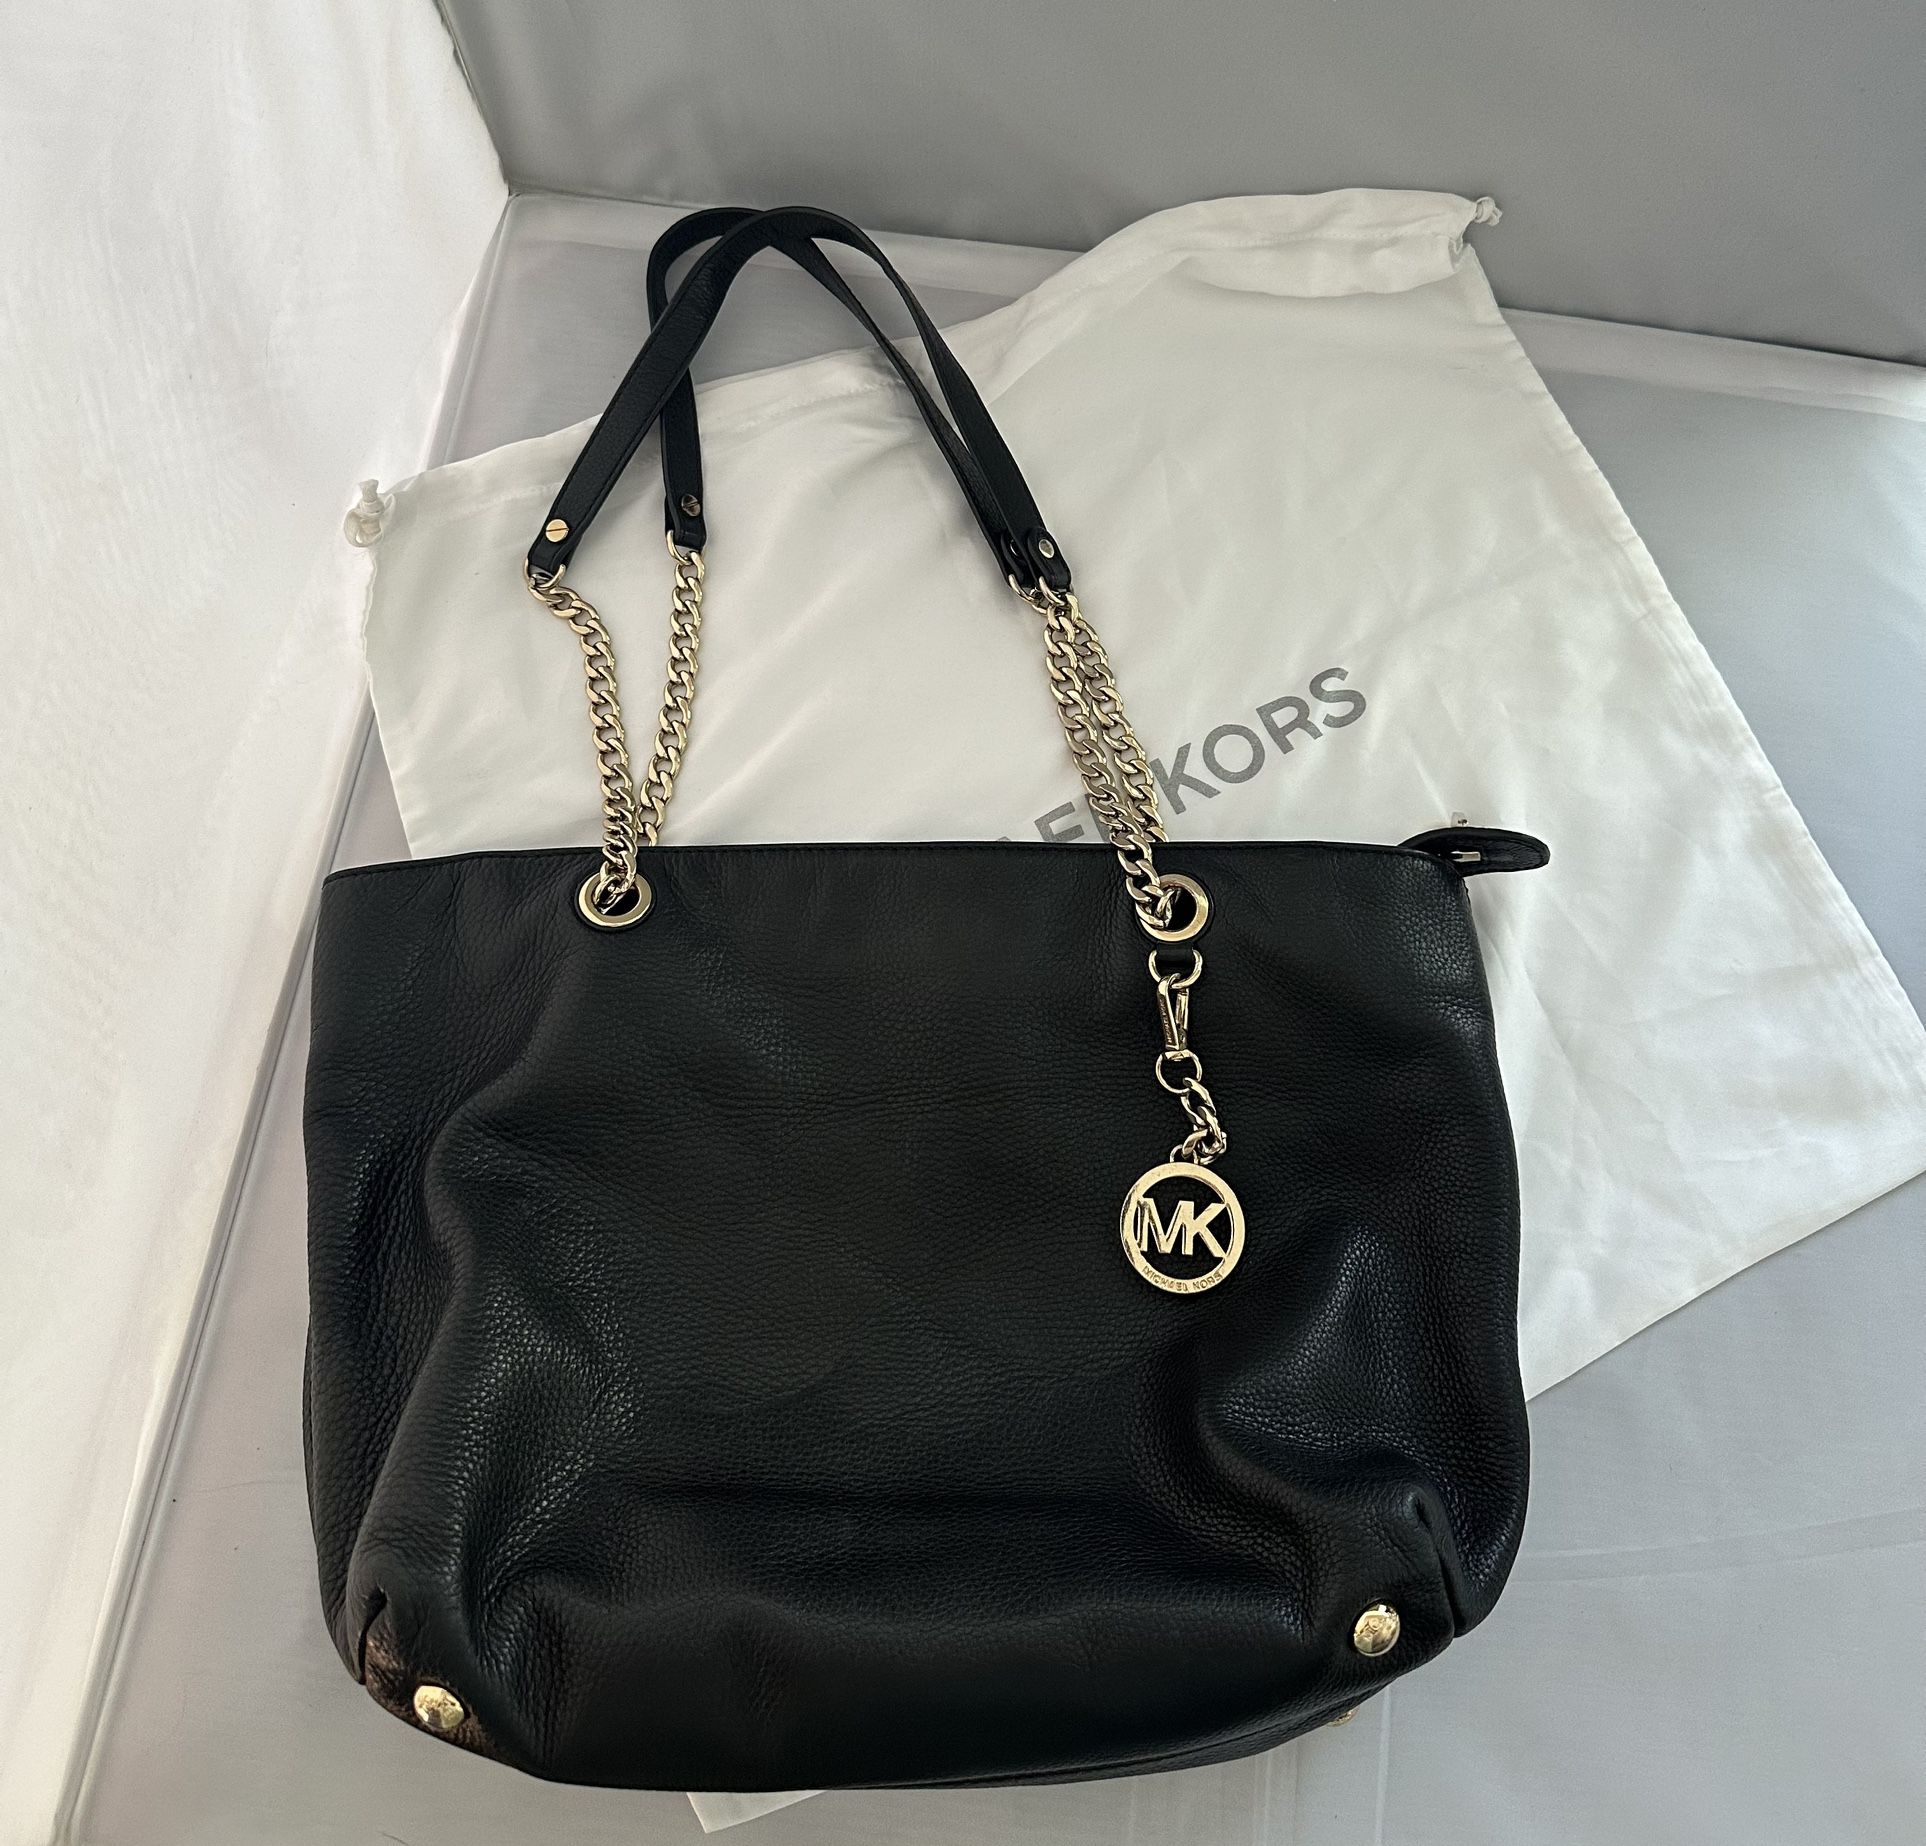 Michael Kors Black Leather Handbag Like New